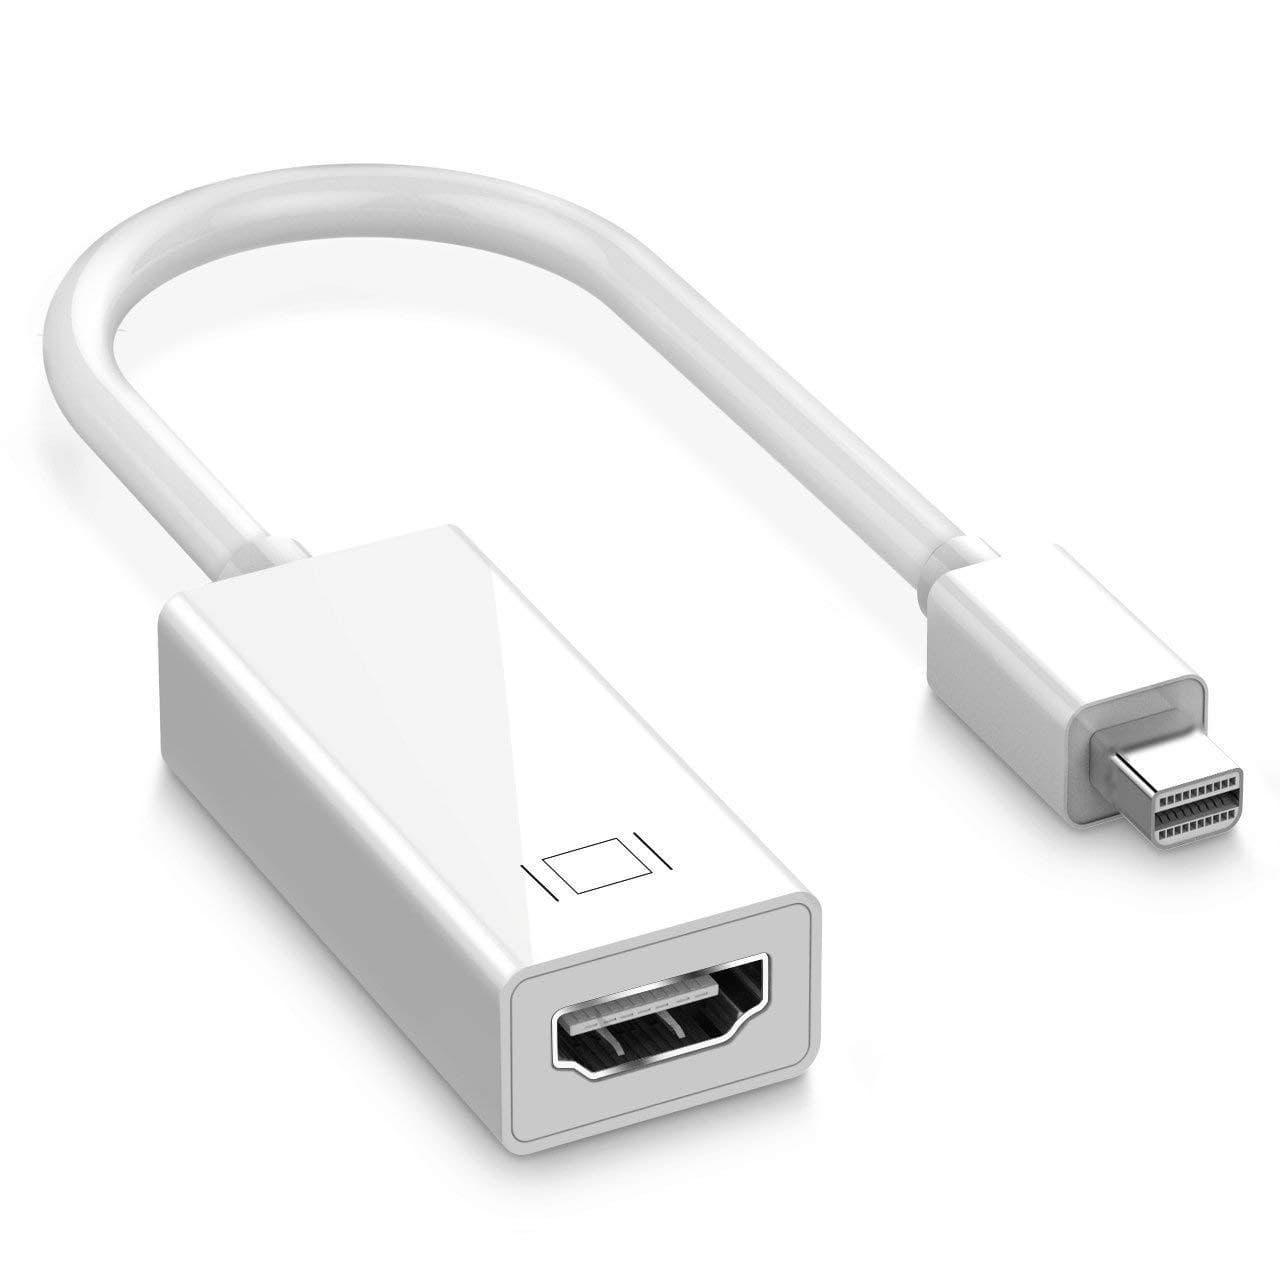 Dealsplant Mini Display Port to HDMI Female Adapter for Apple MacBook MacBook Pro iMac MacBook Air Mac Mini Laptop-adapter-dealsplant